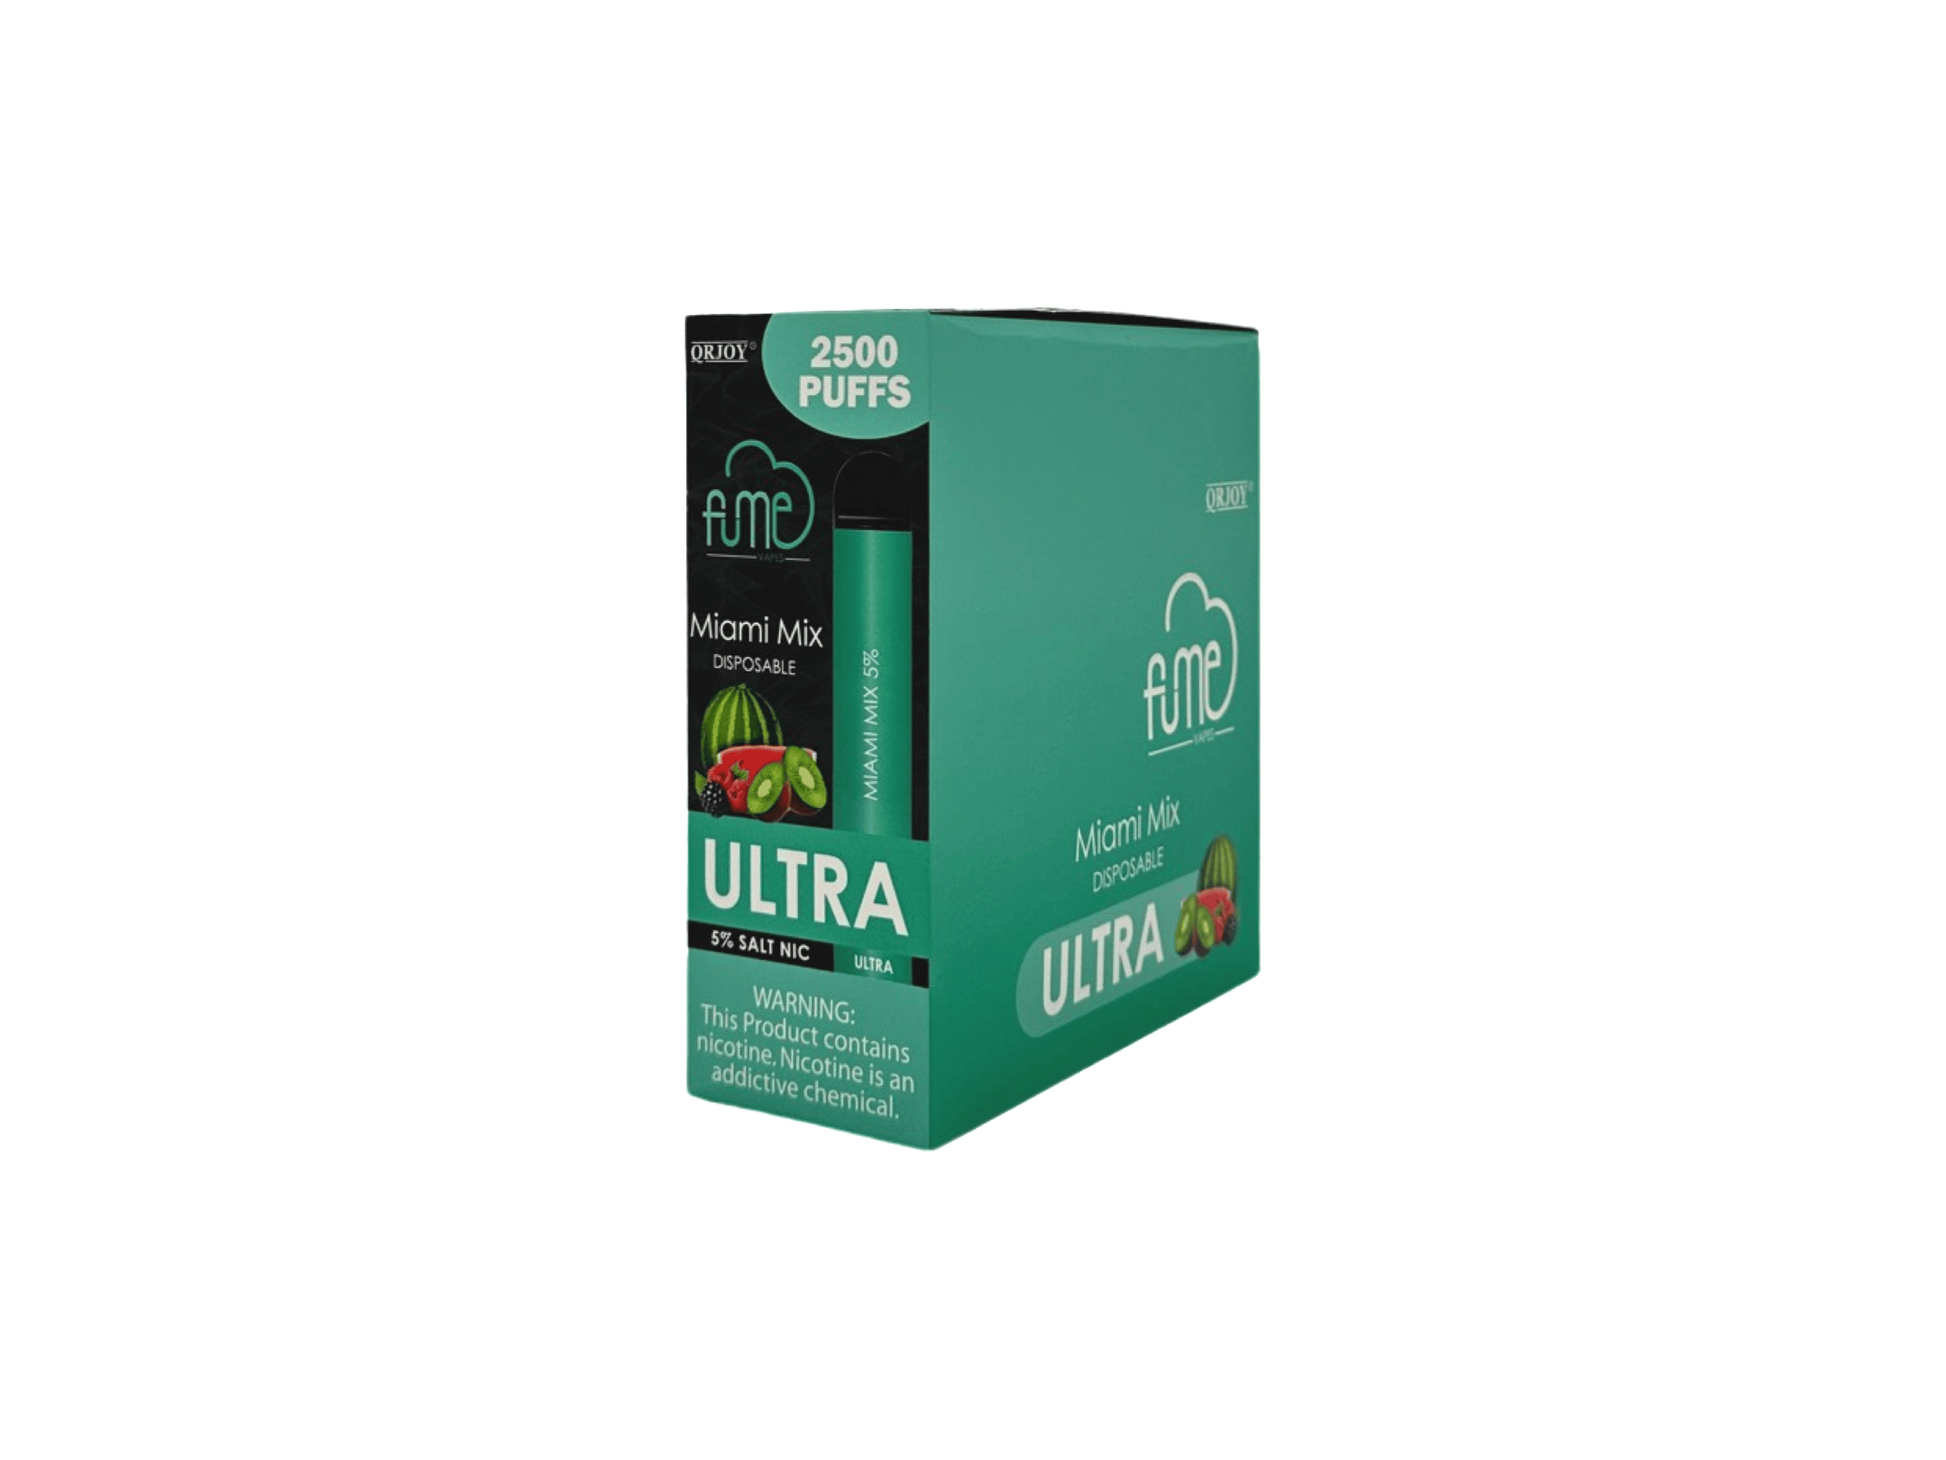 Fume Ultra Miami Mix flavored disposable vape device big box.